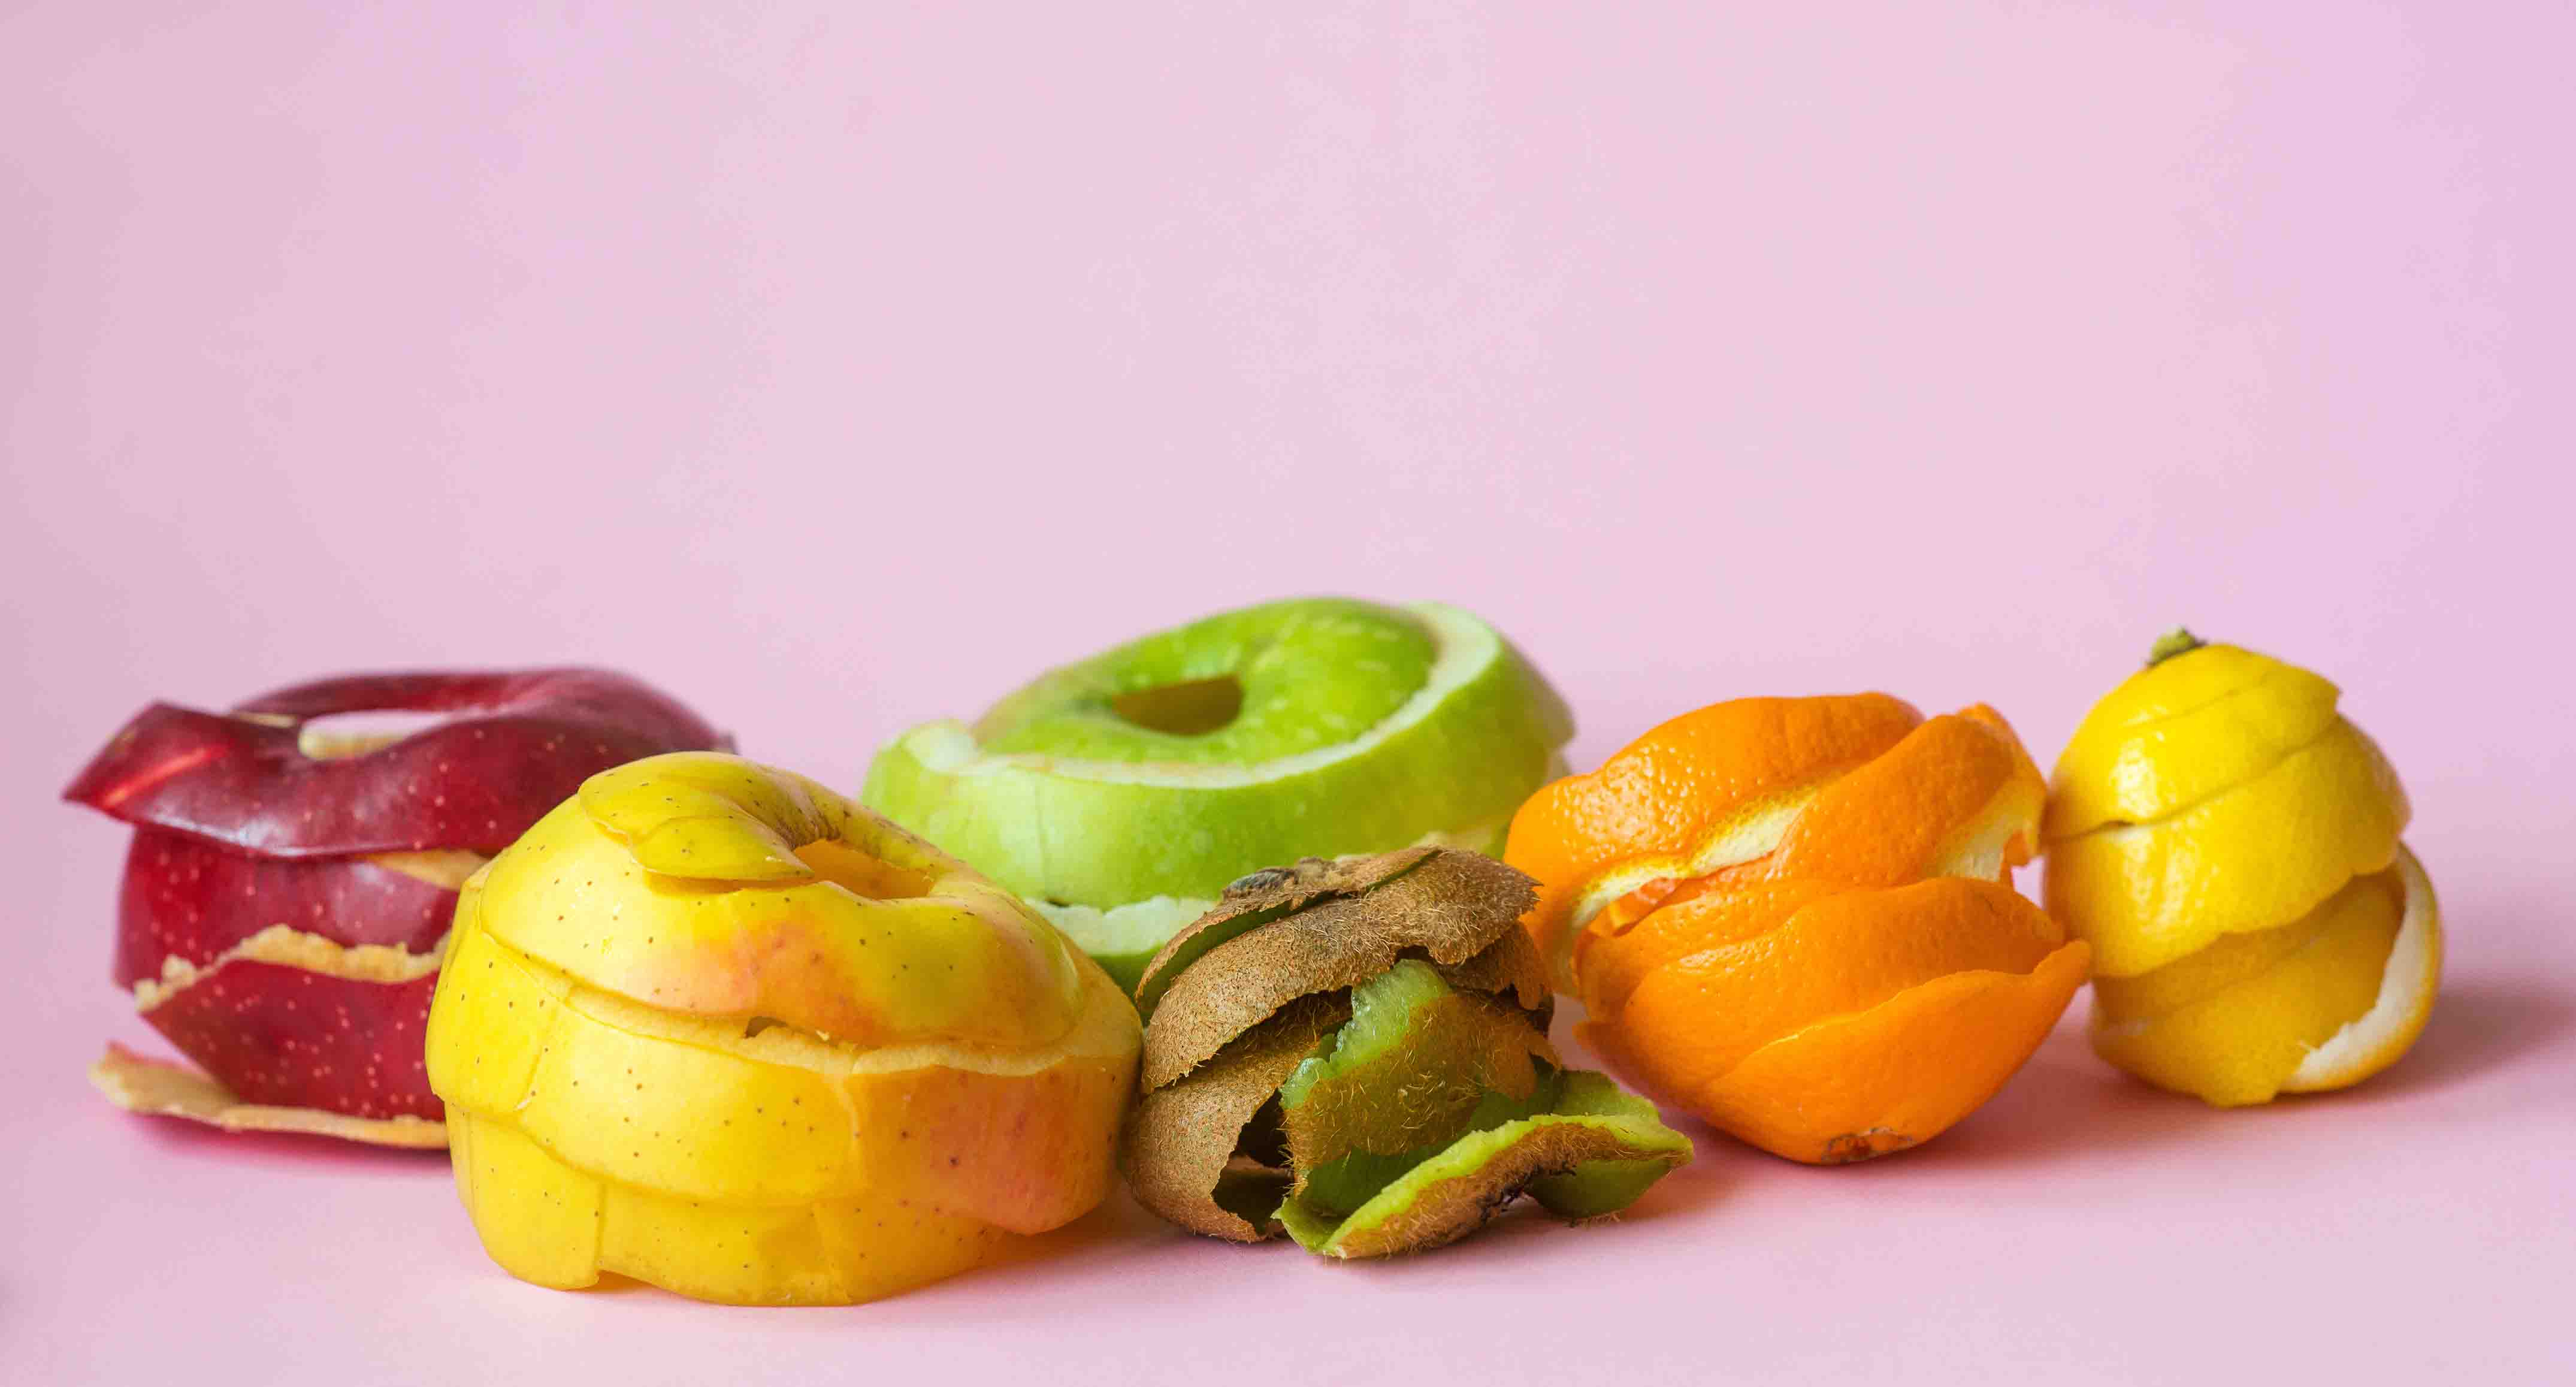 kiwi, orange, lemon and red, green, yellow apple peels on pink b